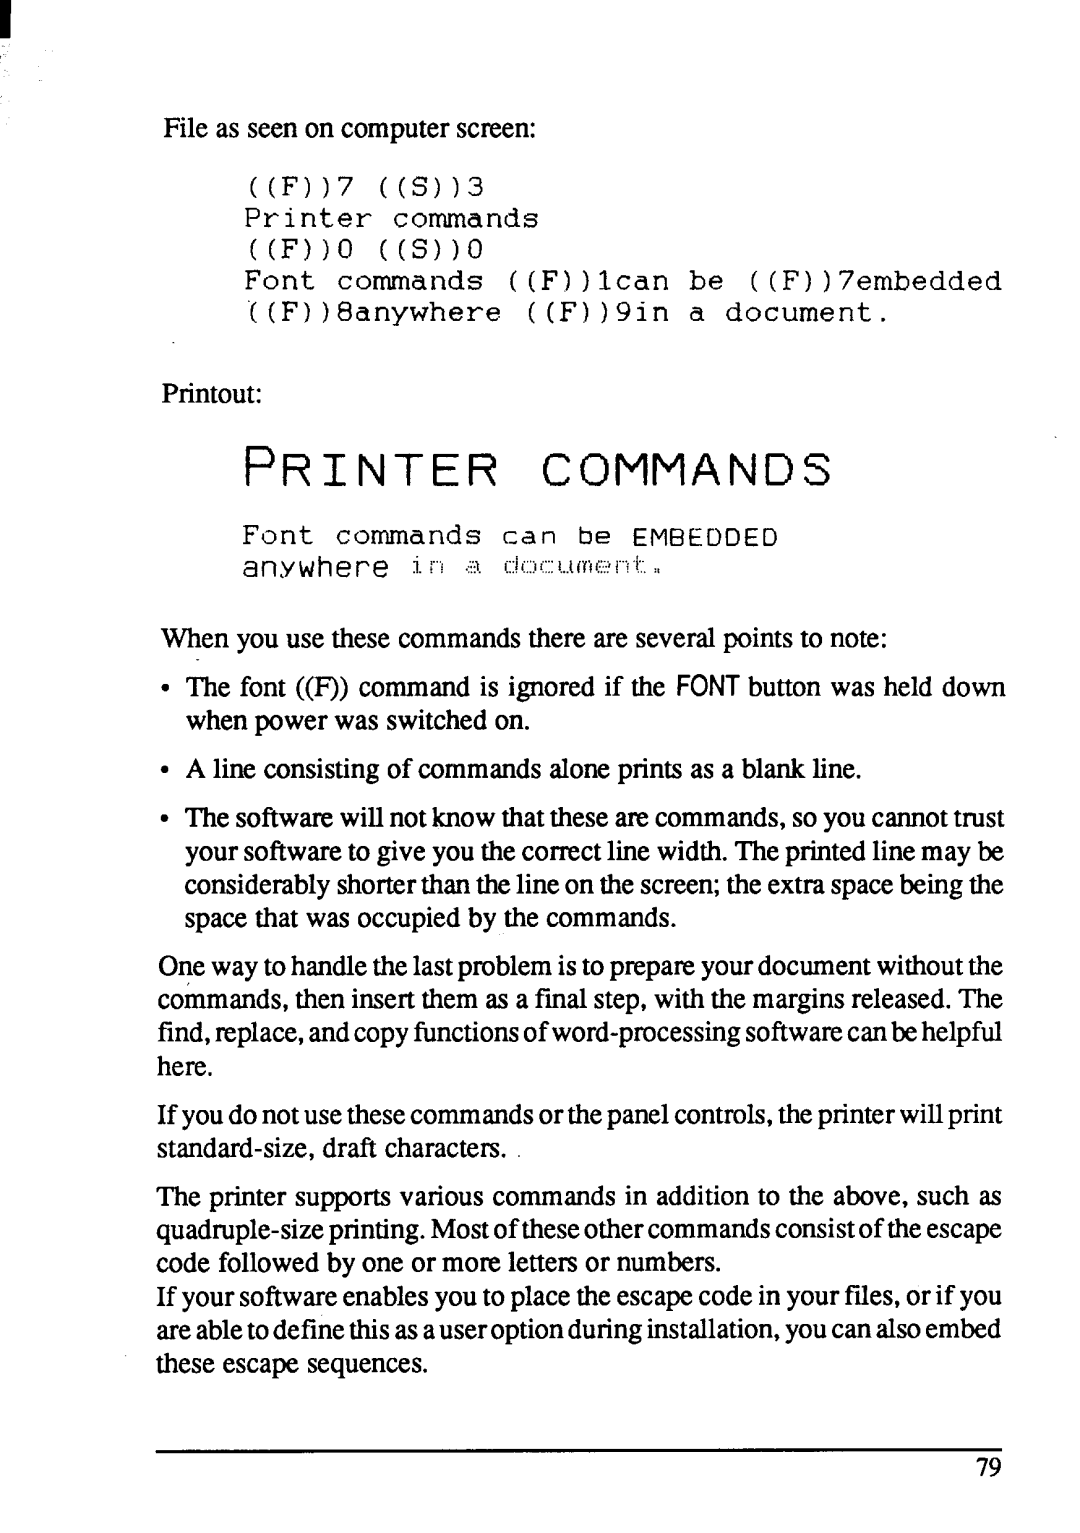 Star Micronics NX-1001 manual Printer Commands 